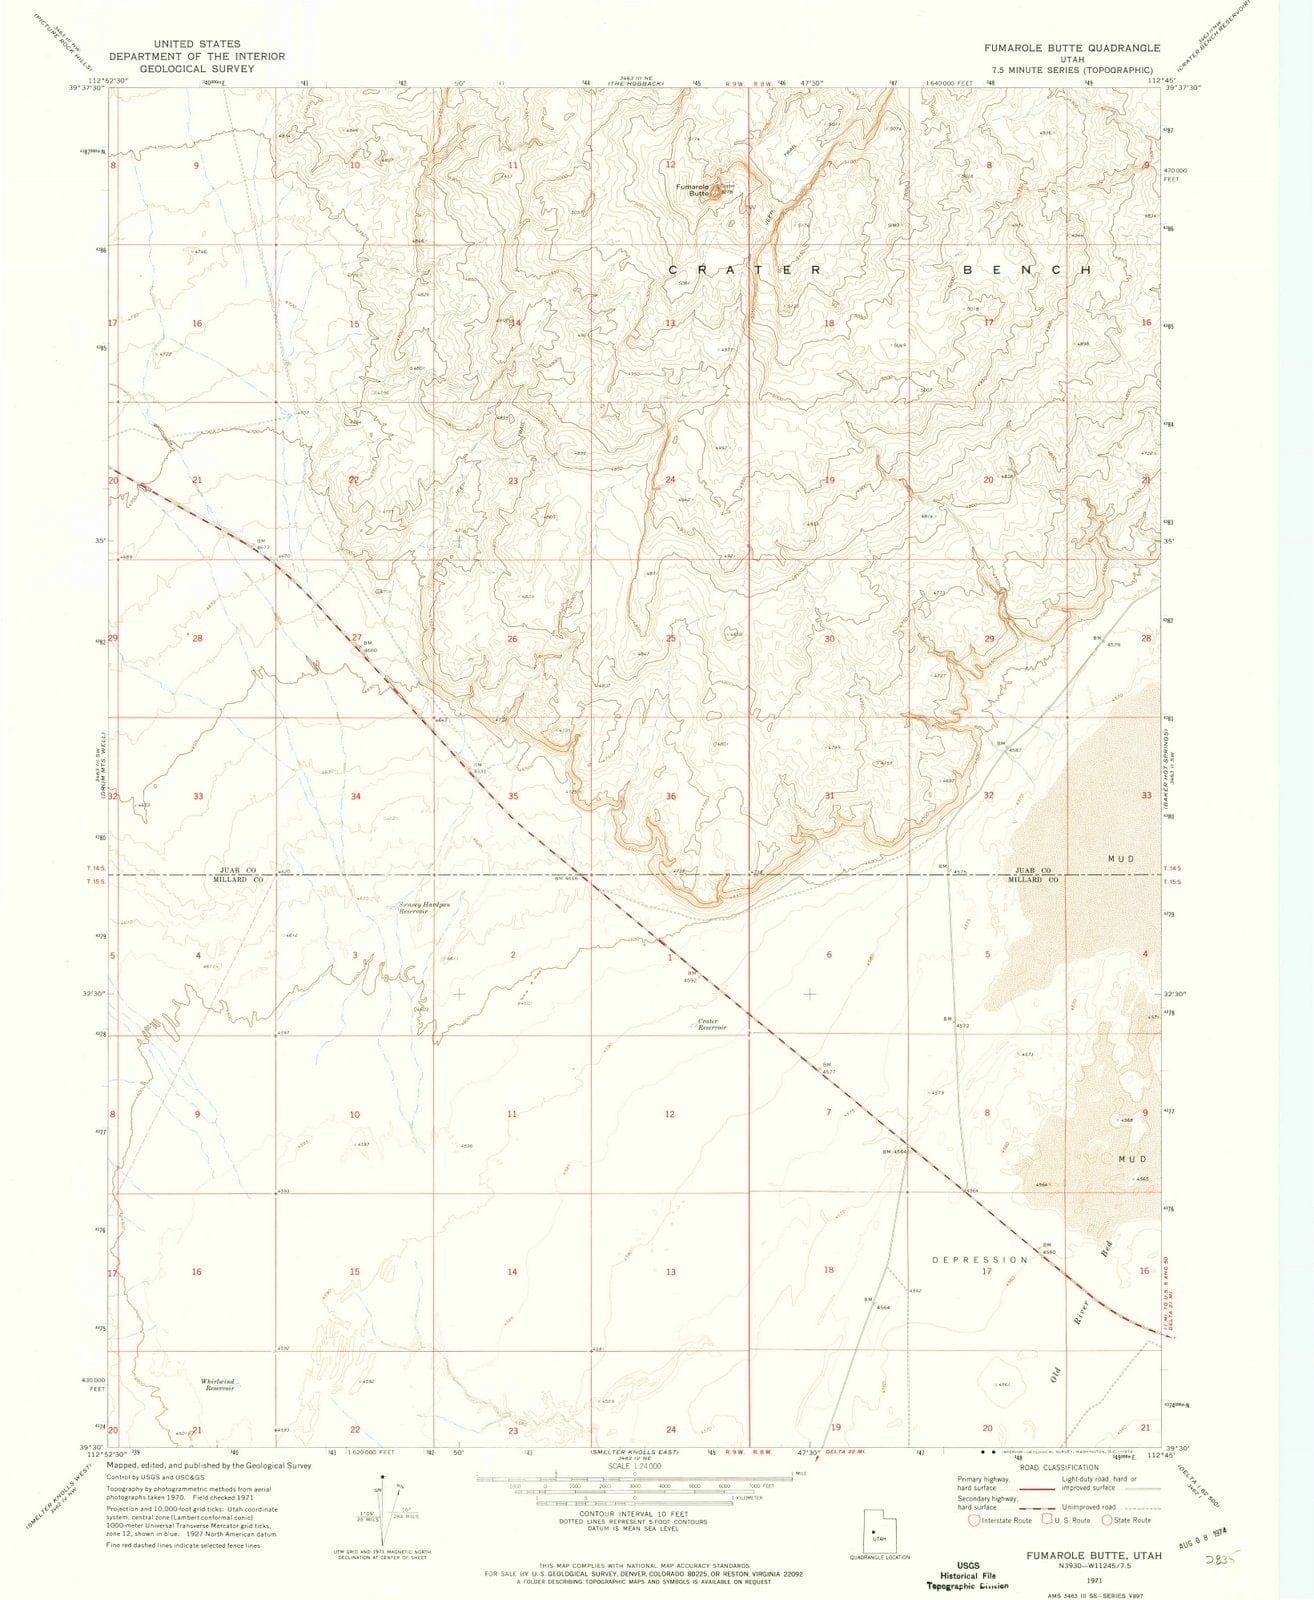 1971 Fumarole Butte, UT - Utah - USGS Topographic Map